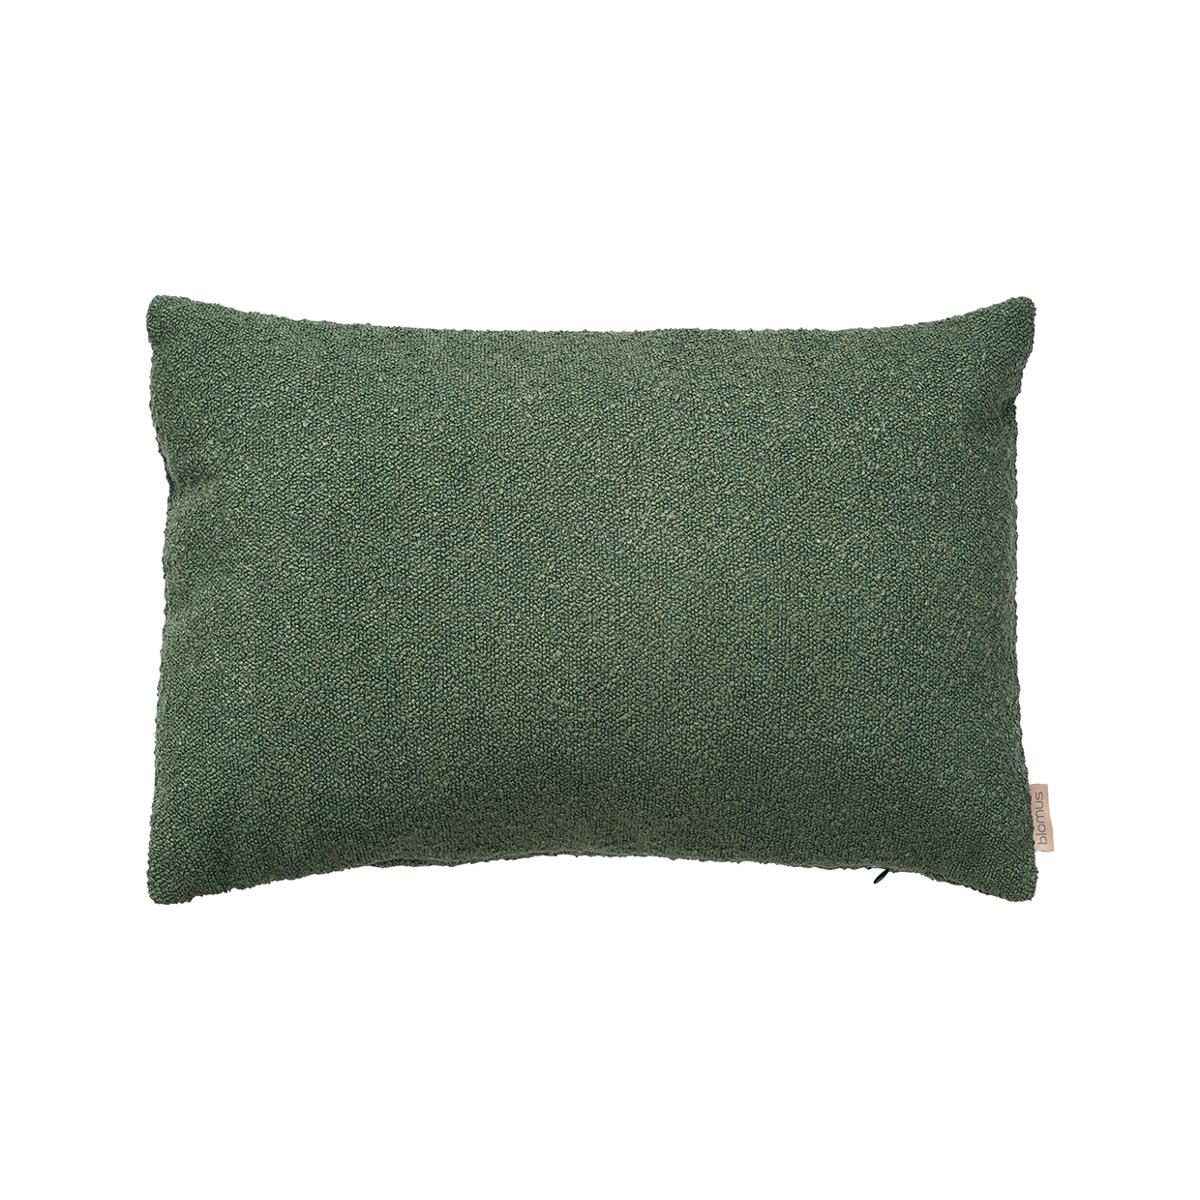 Kissenbezug -BOUCLE- Duck Green 40 x 60 cm. Material: 90% Polyester, 10% Acryl. Von Blomus.